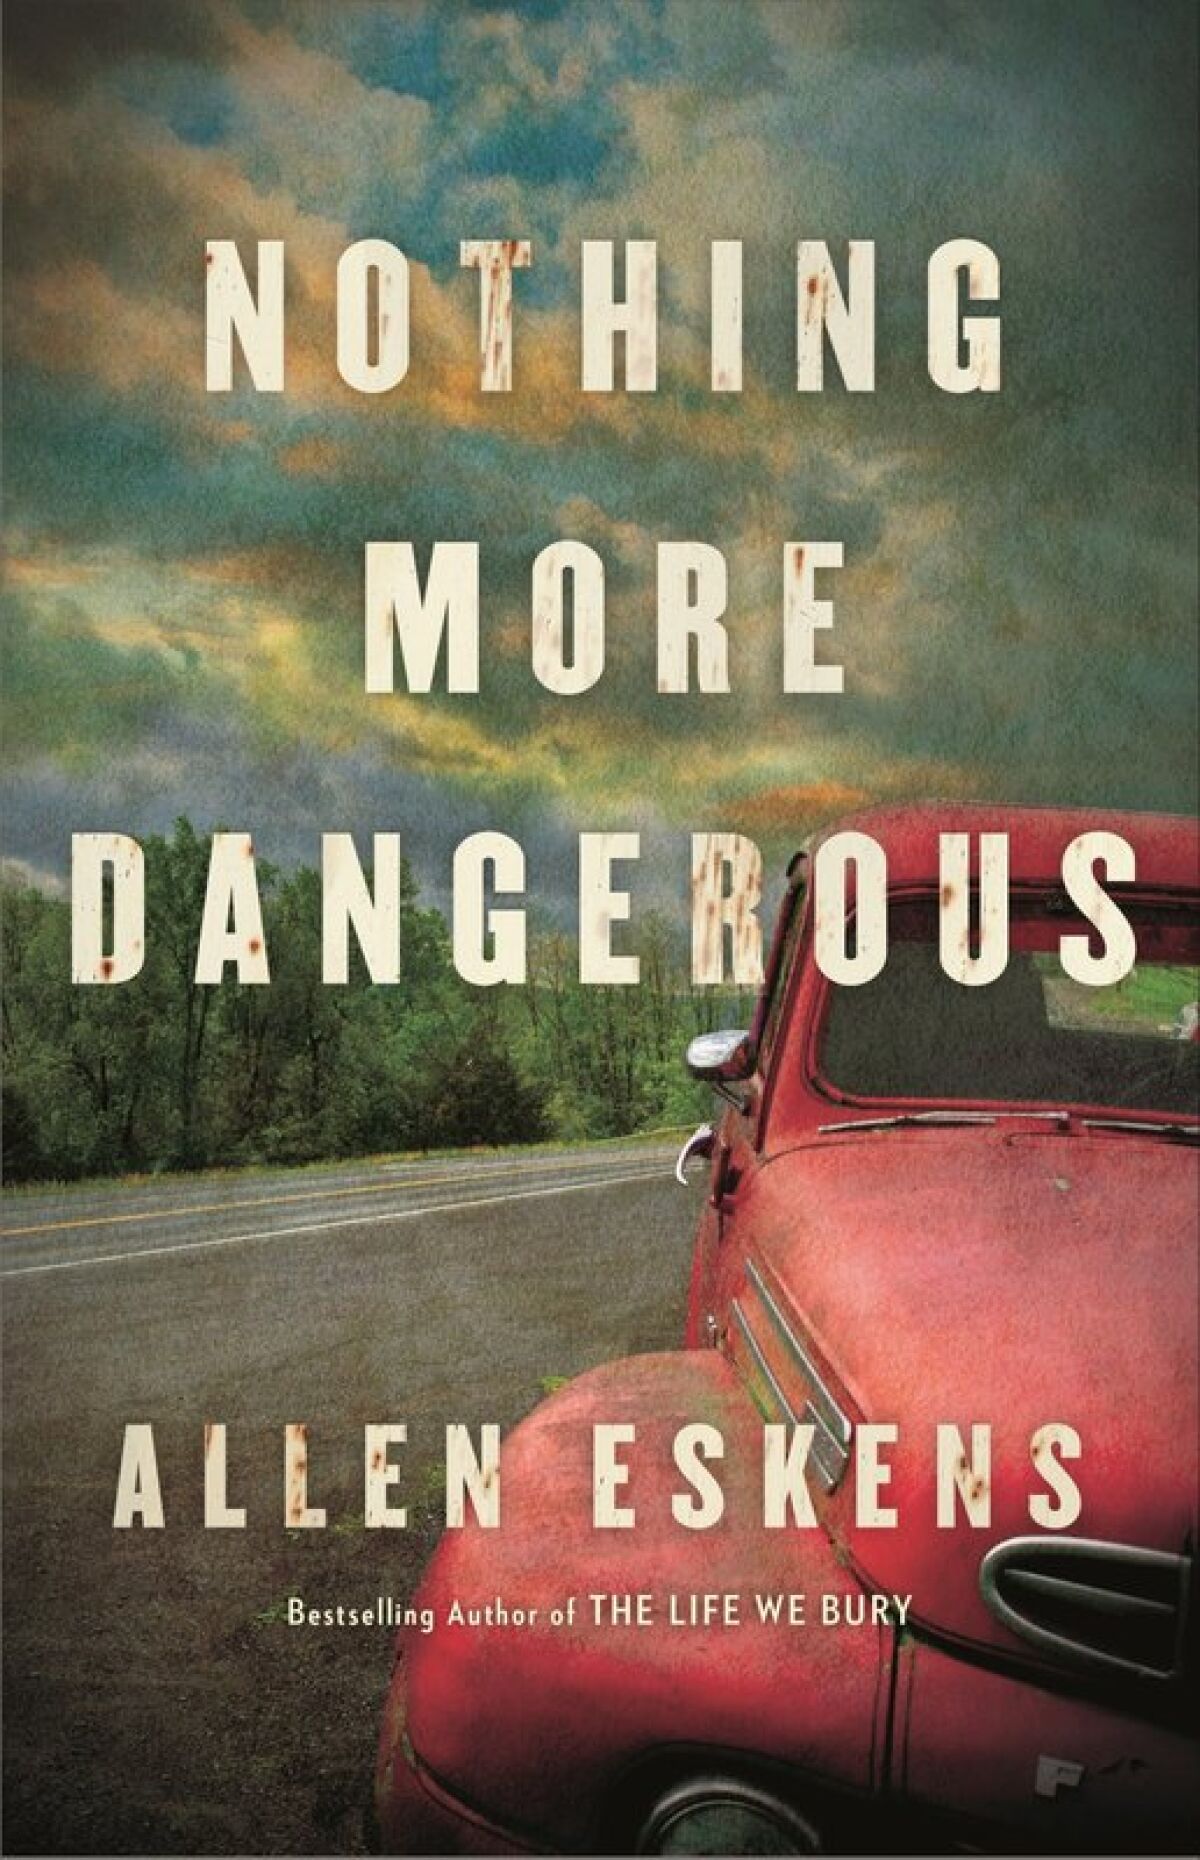 “Nothing More Dangerous” by Allen Eskens.